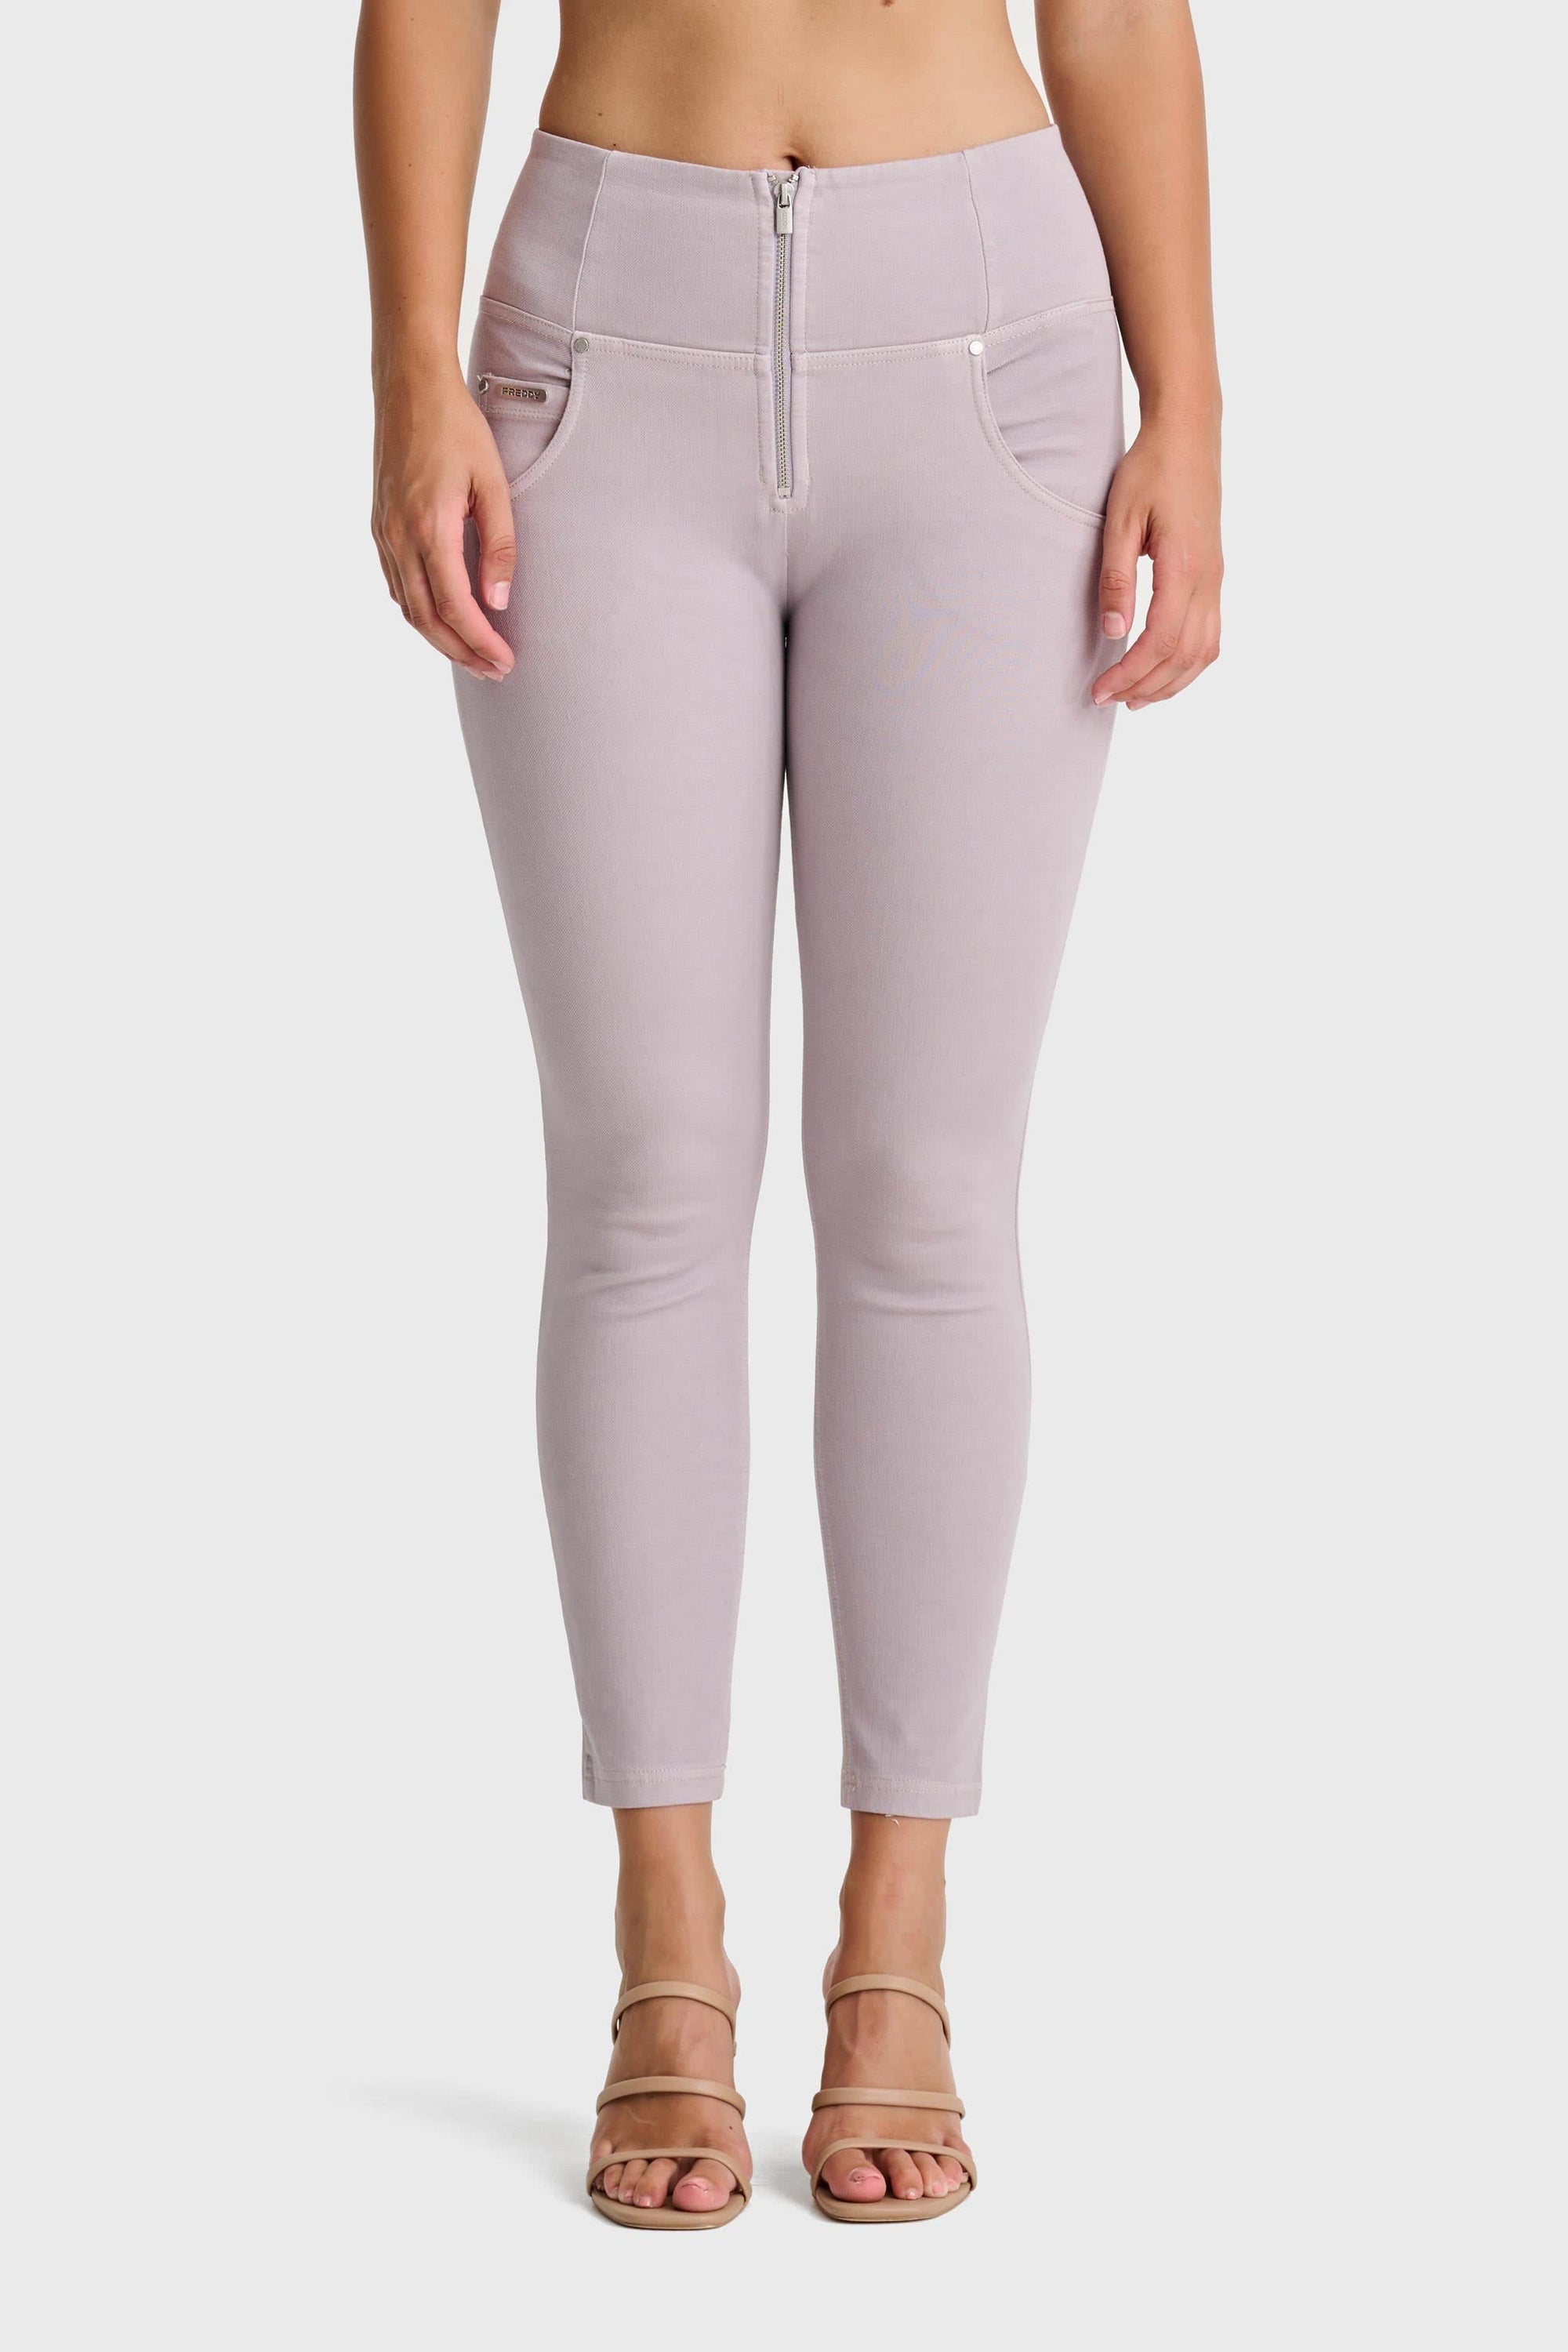 WR.UP® Snug Jeans - High Waisted - Petite Length - Light Grey 5